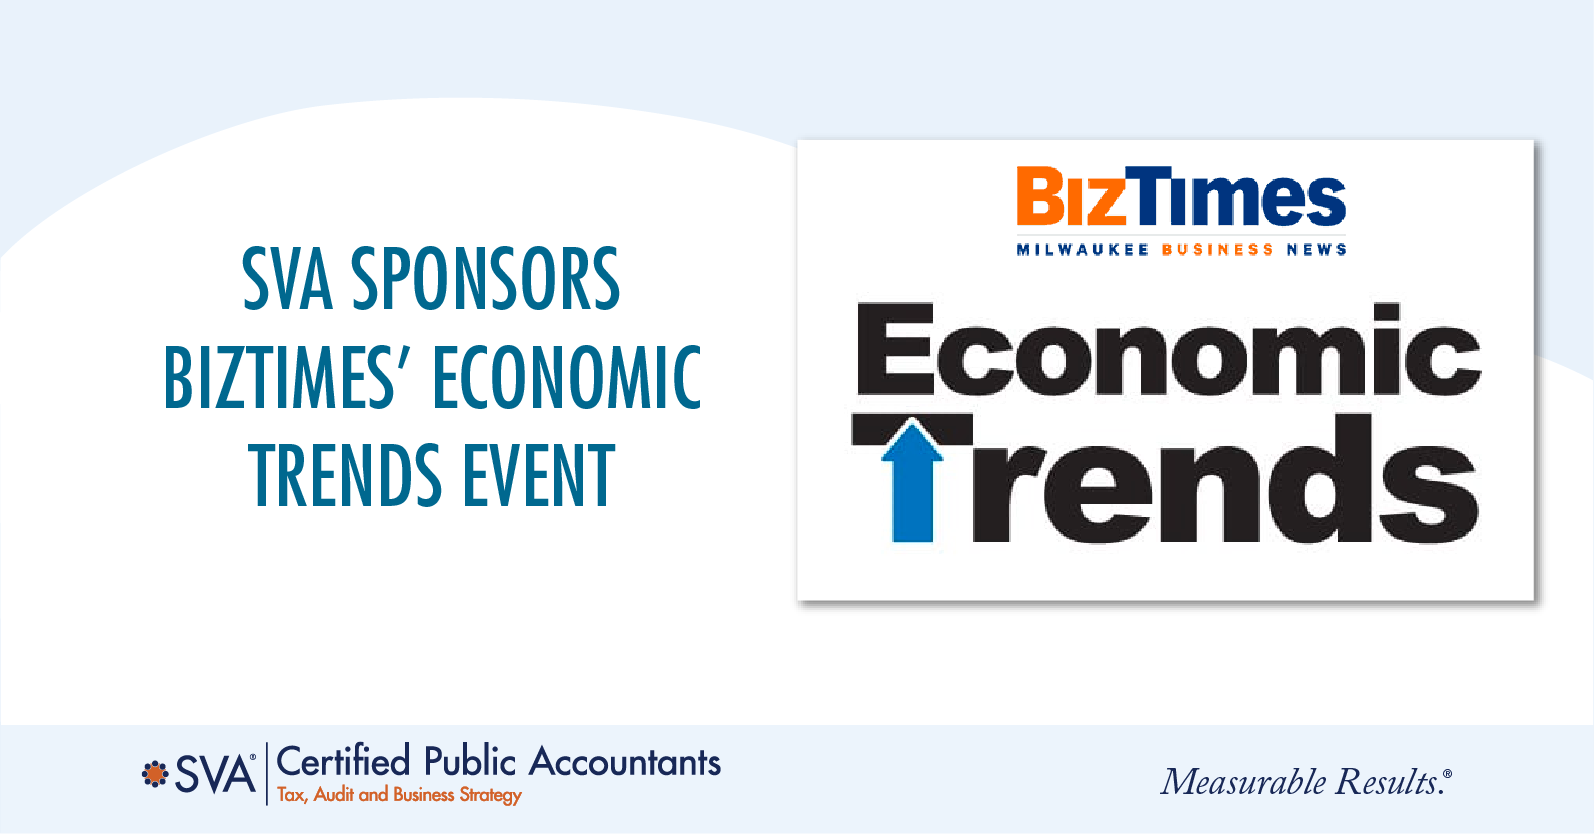 SVA Sponsors BizTimes’ Economic Trends Event